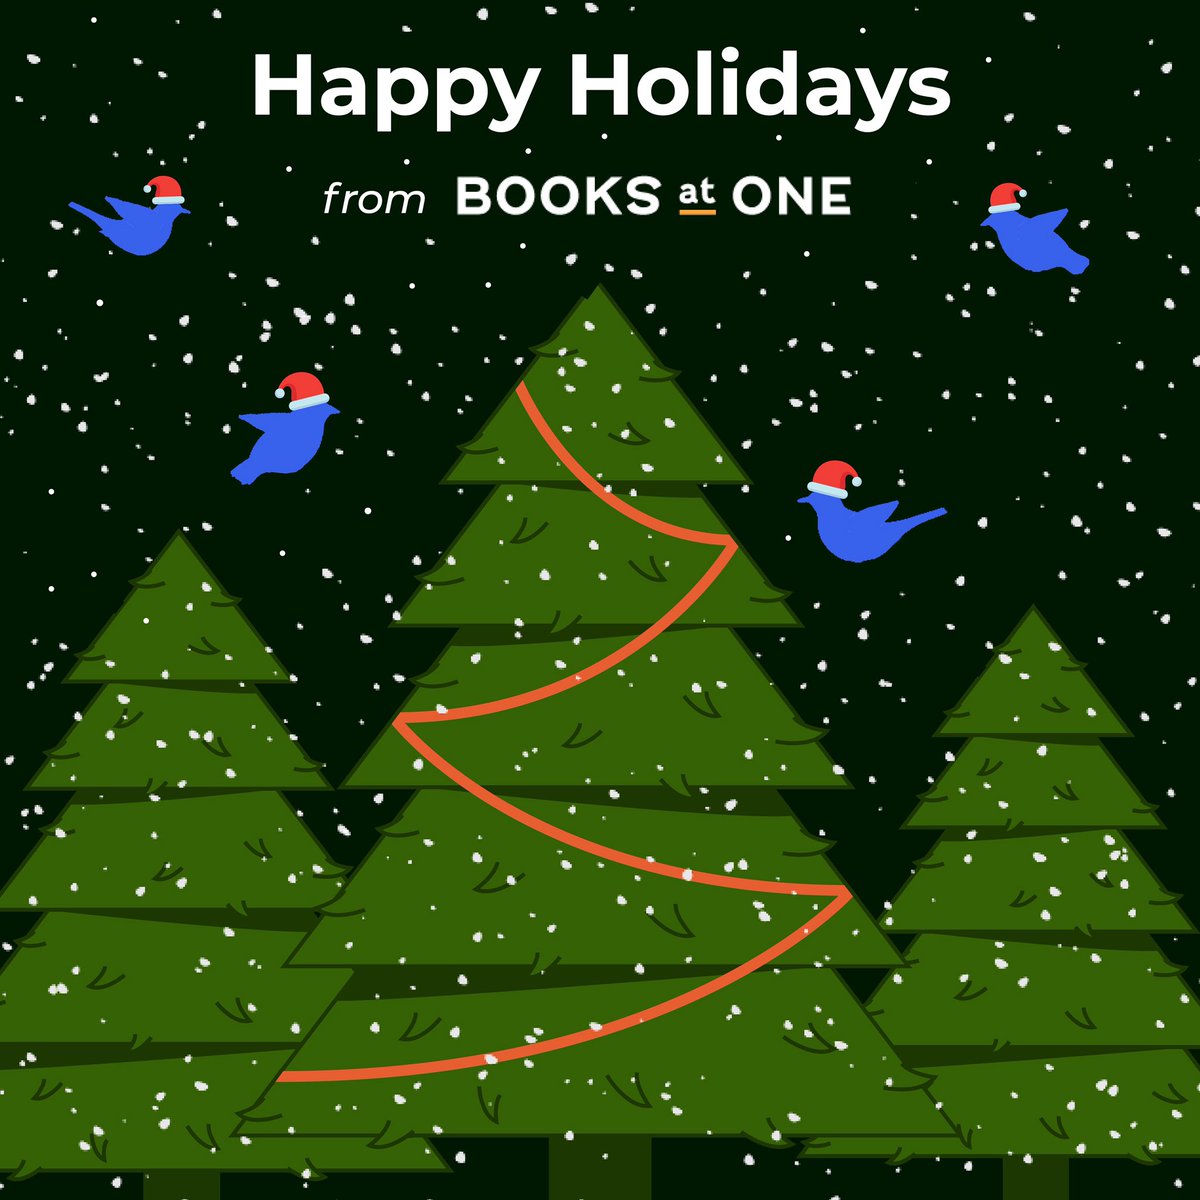 Wishing everyone a happy holiday season and happy new year from all of us here at Books at One Dublin! ⭐️🎄📚 • • • #booksatonedublin #booksofinstagram #theliberties #stpatrickscathedral #dublinartscouncil #shoplocal #newreleases #buyirish #booksatonefamily #dublinbookshop